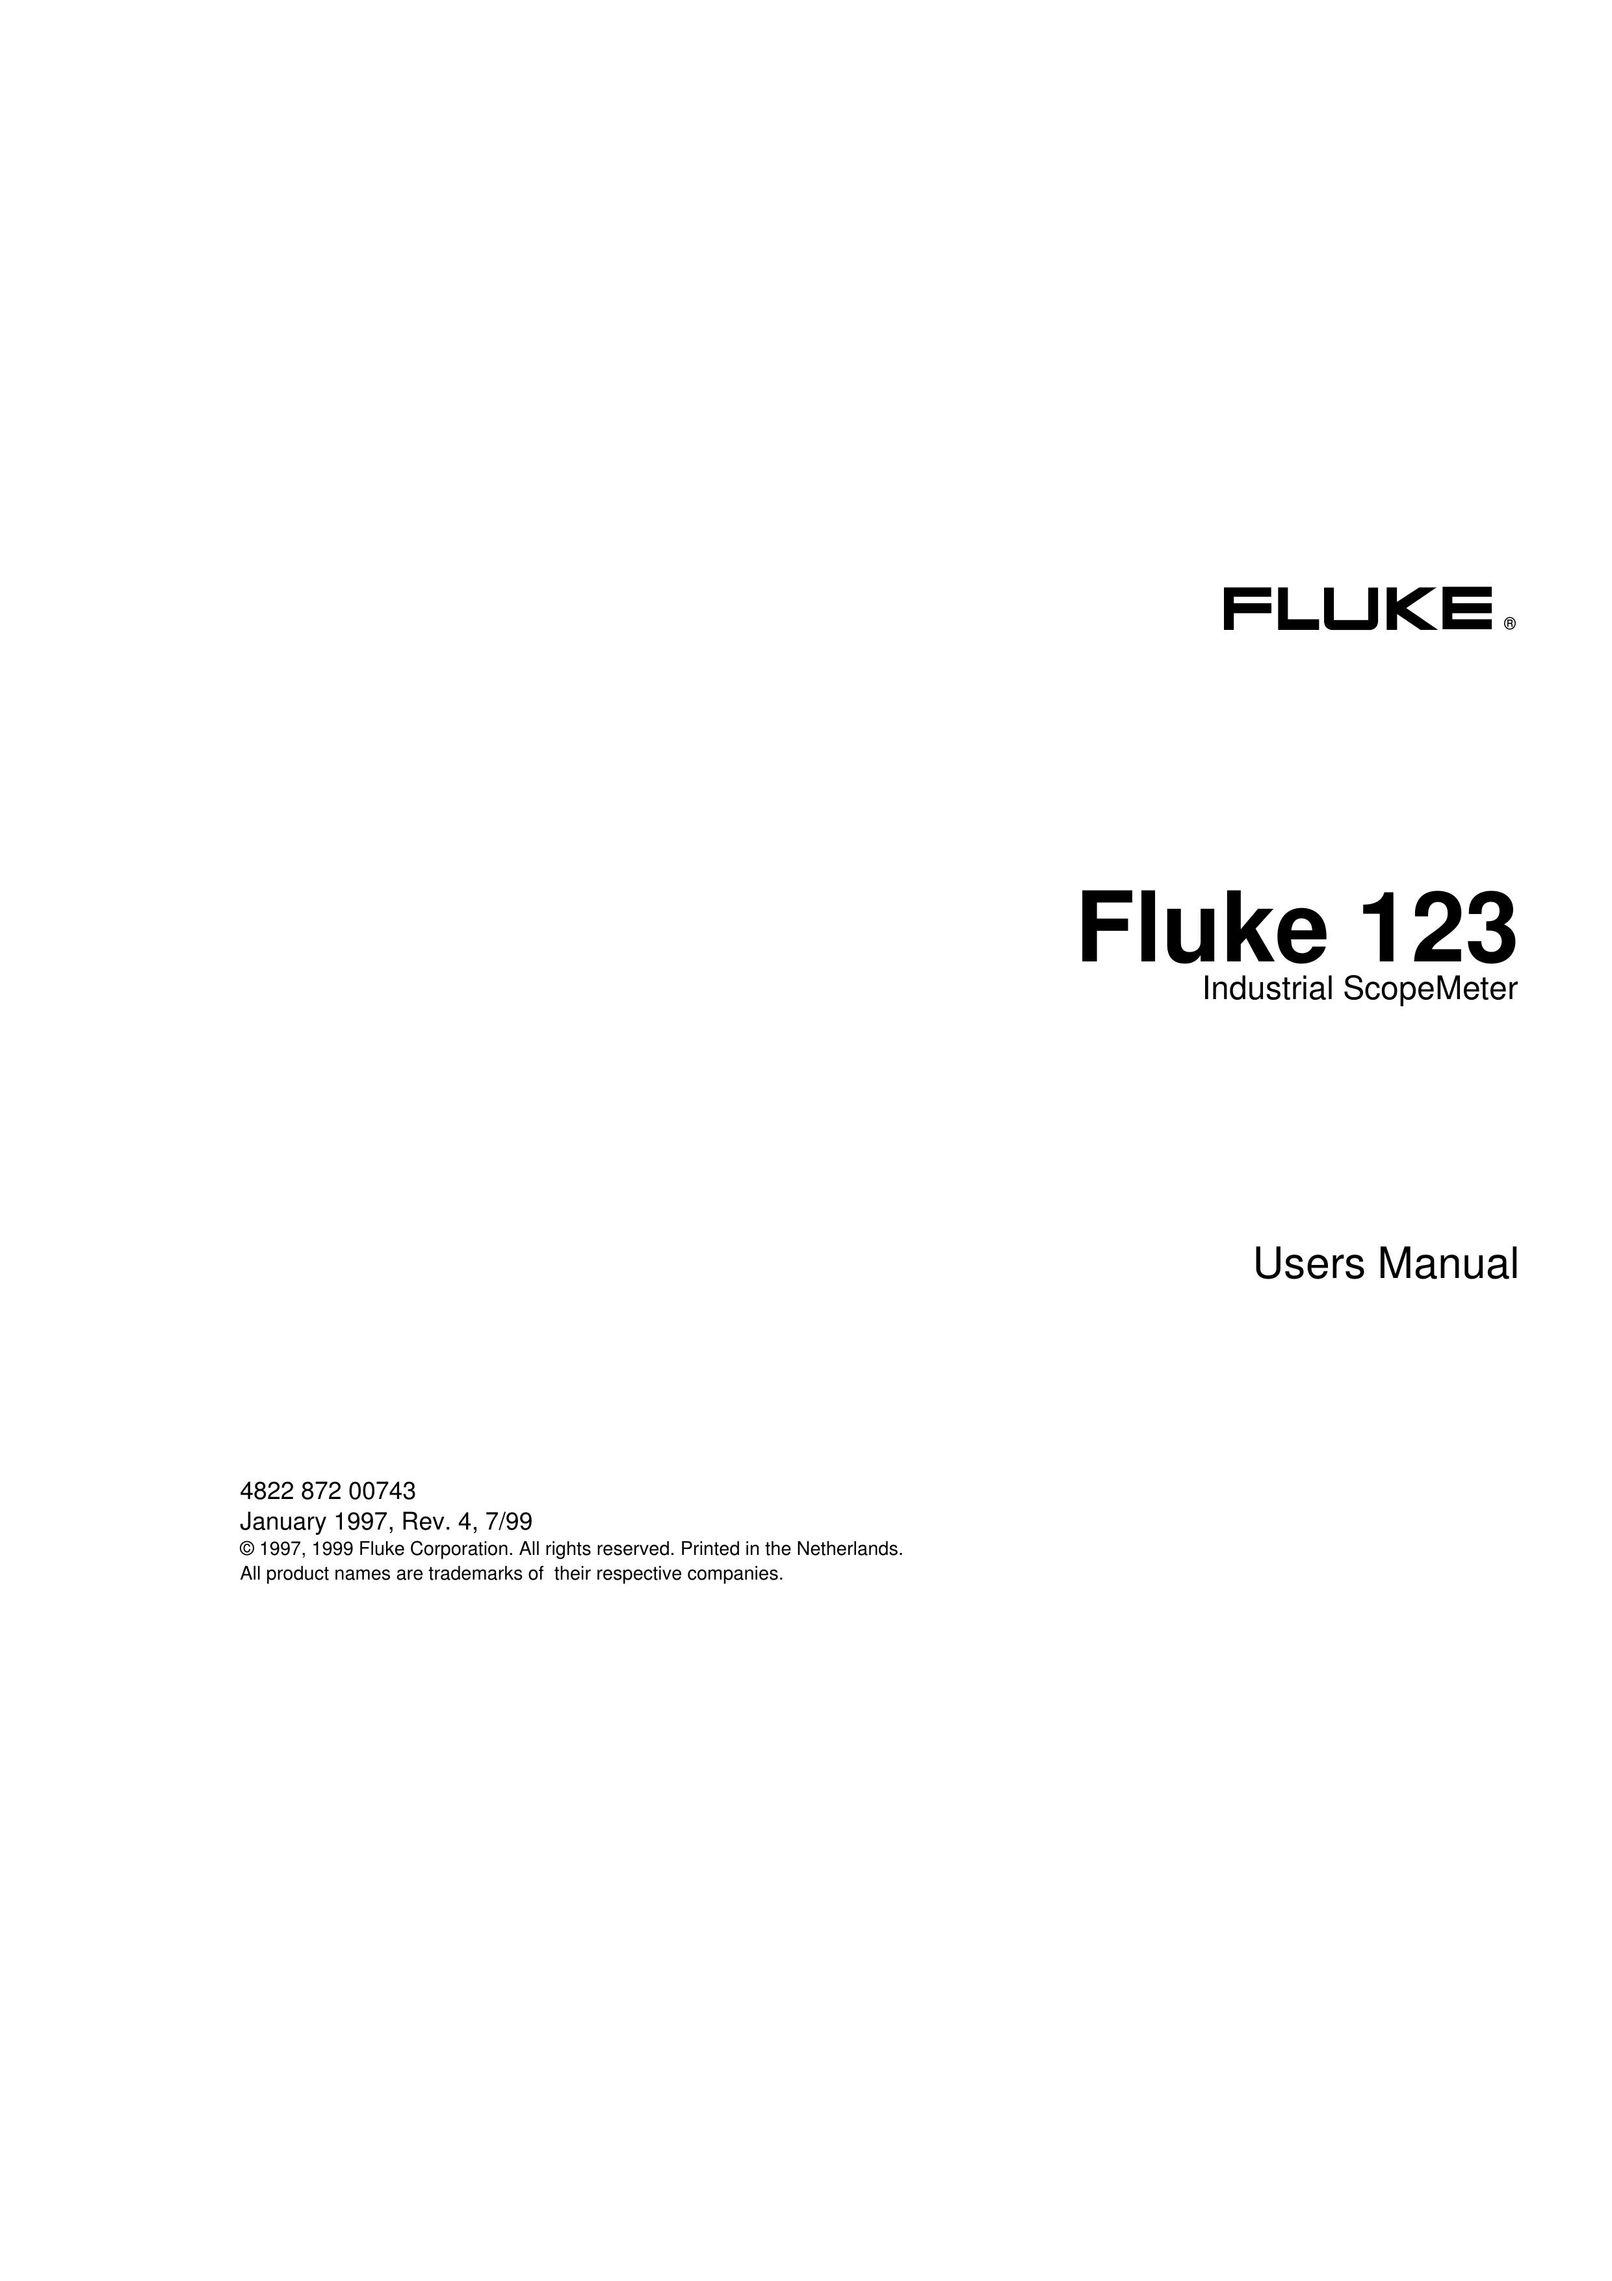 Fluke fluke123 Sewing Machine User Manual